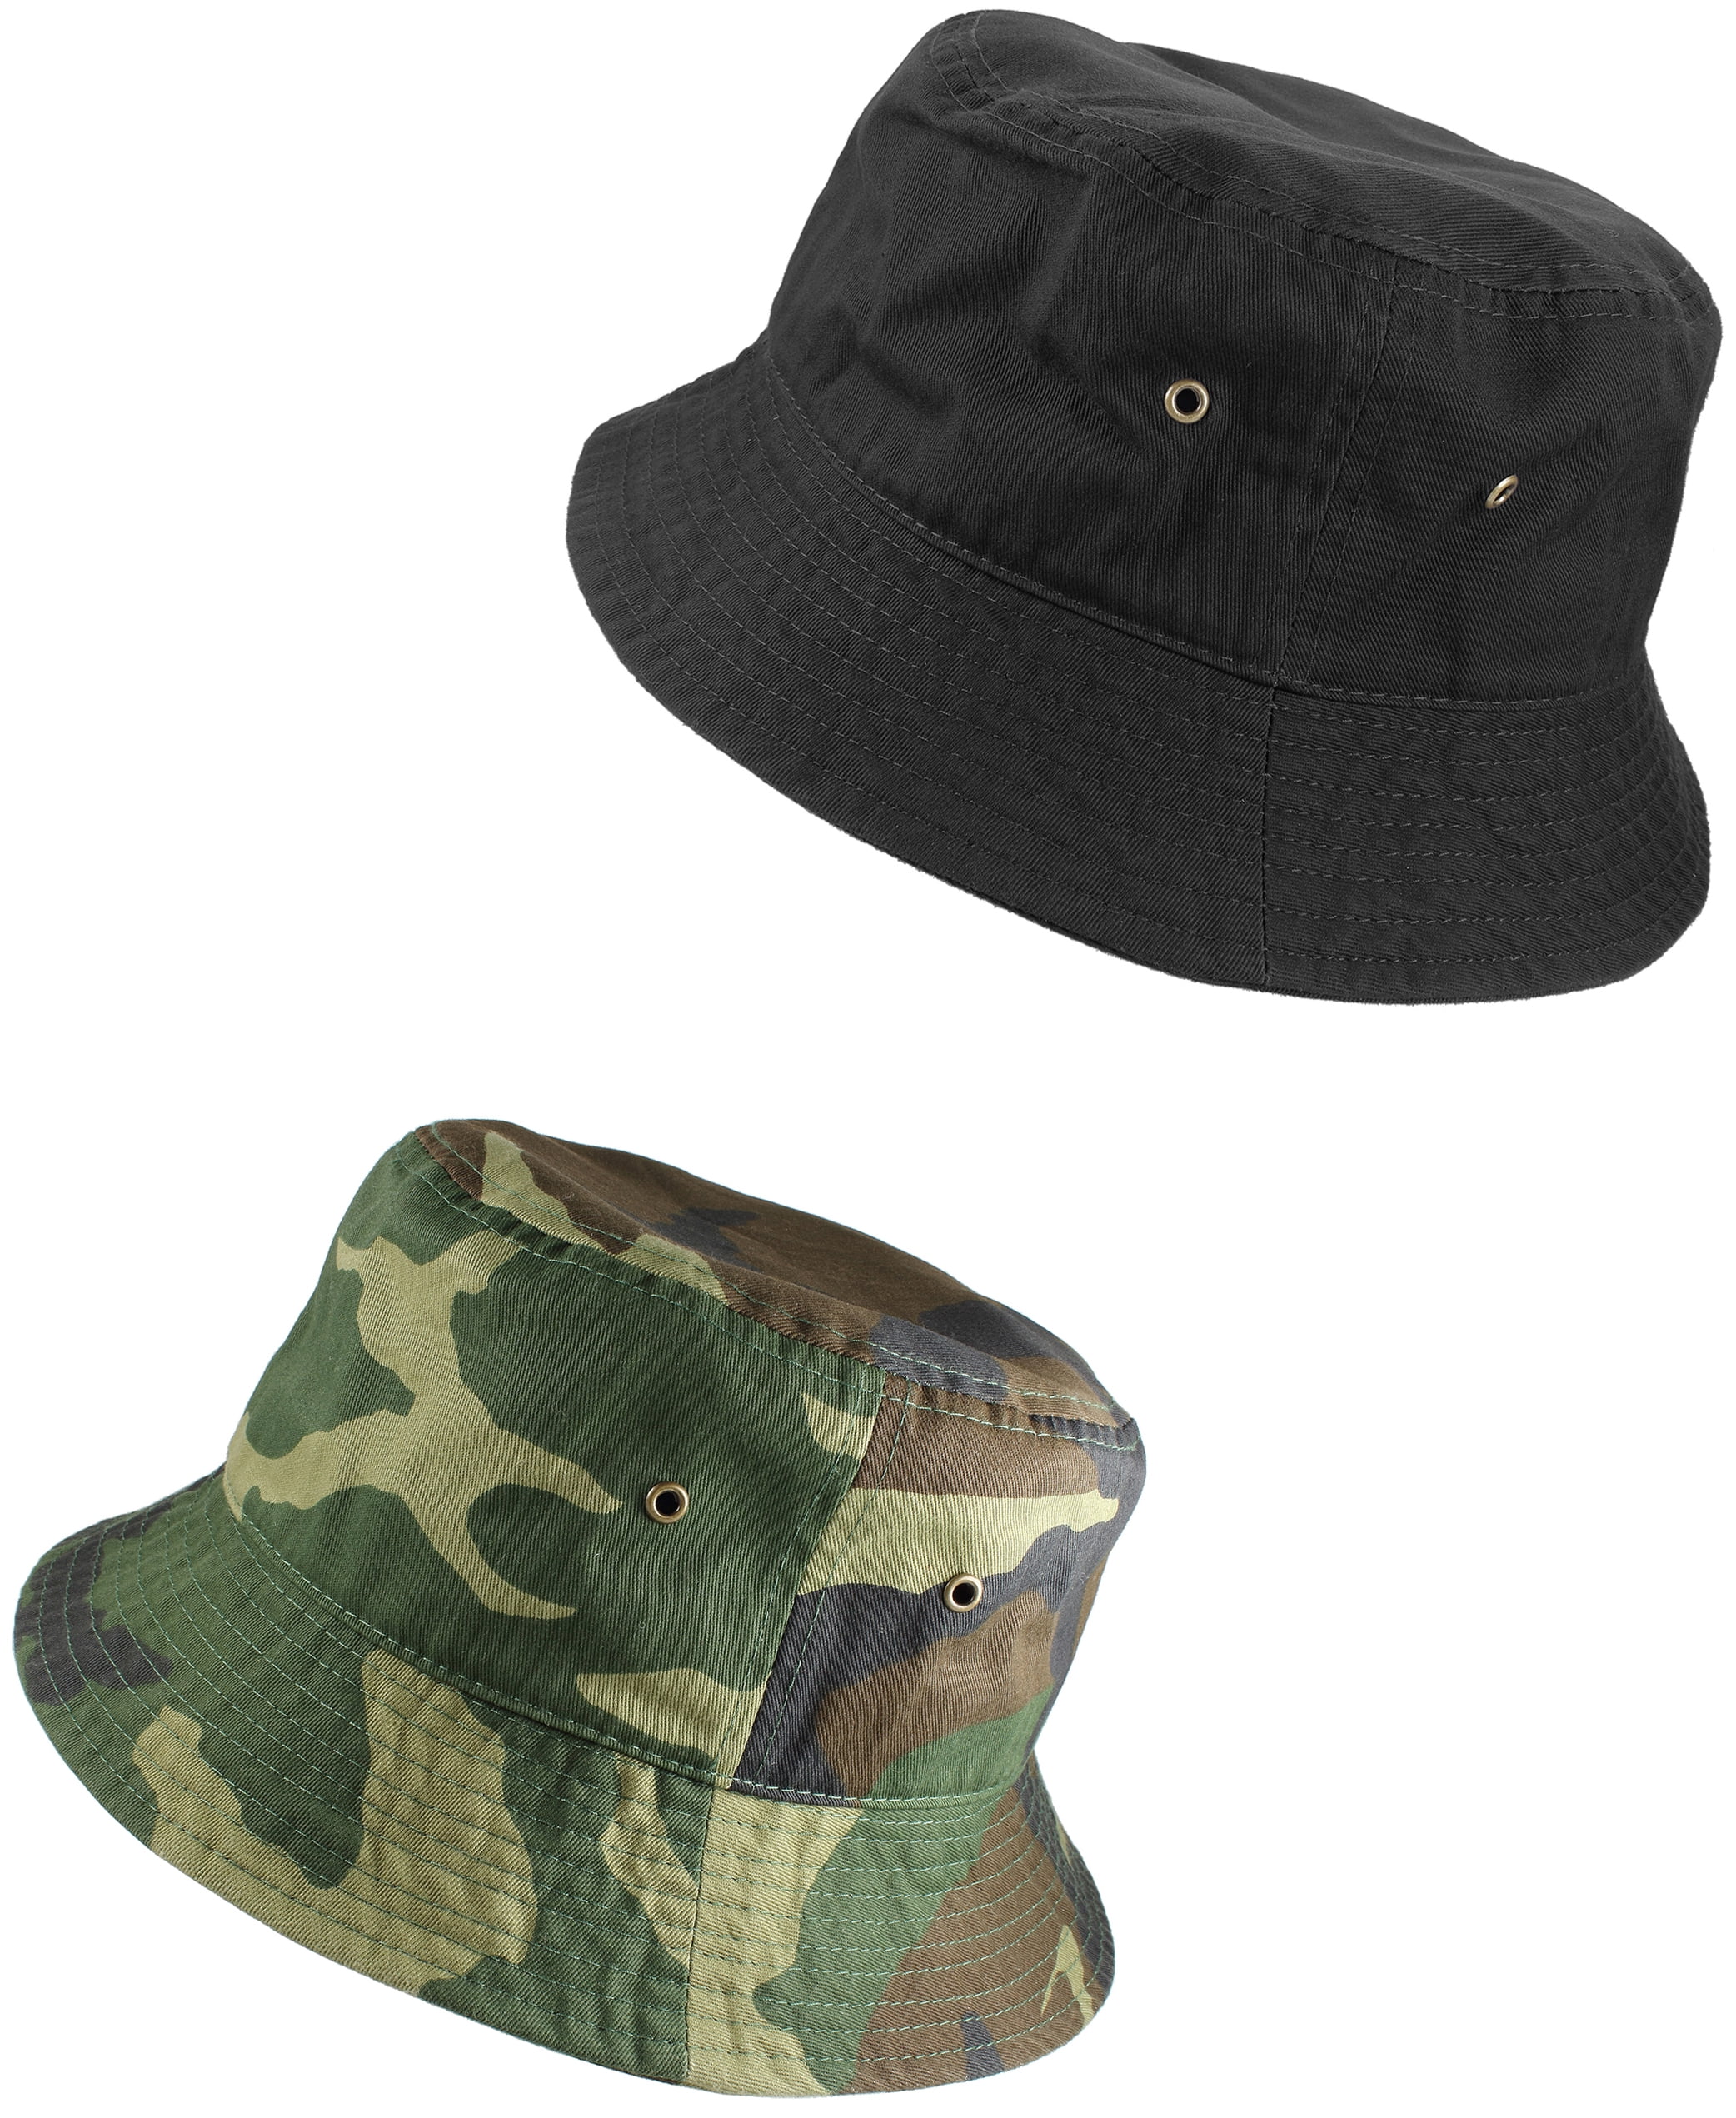 Flat Earth Society Unisex Cotton Packable Black Travel Bucket Hat Fishing Cap 